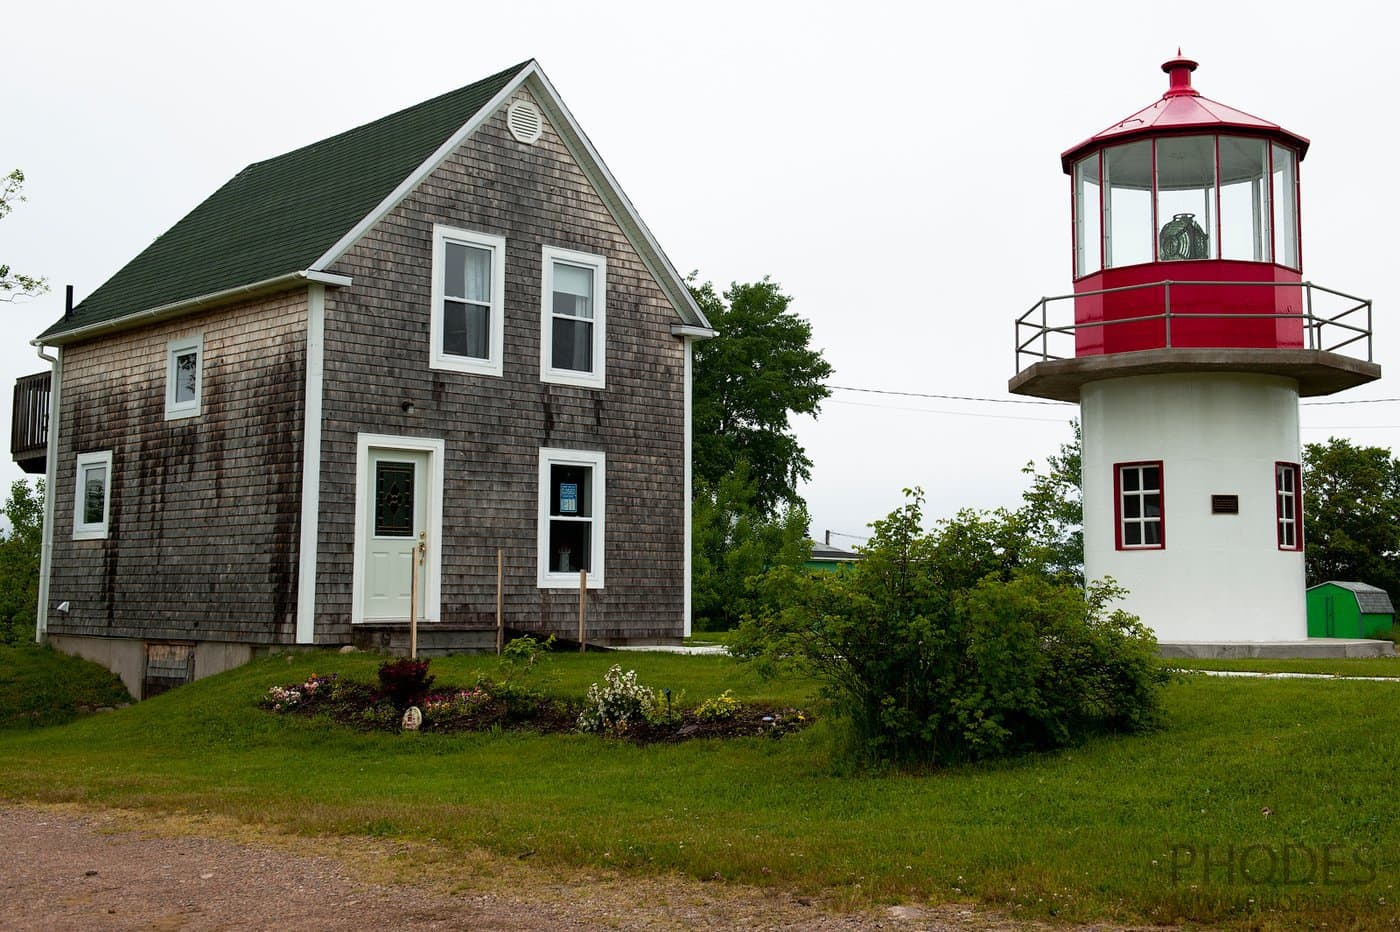 Lighthouse-museum on Cape Breton Island in Nova Scotia